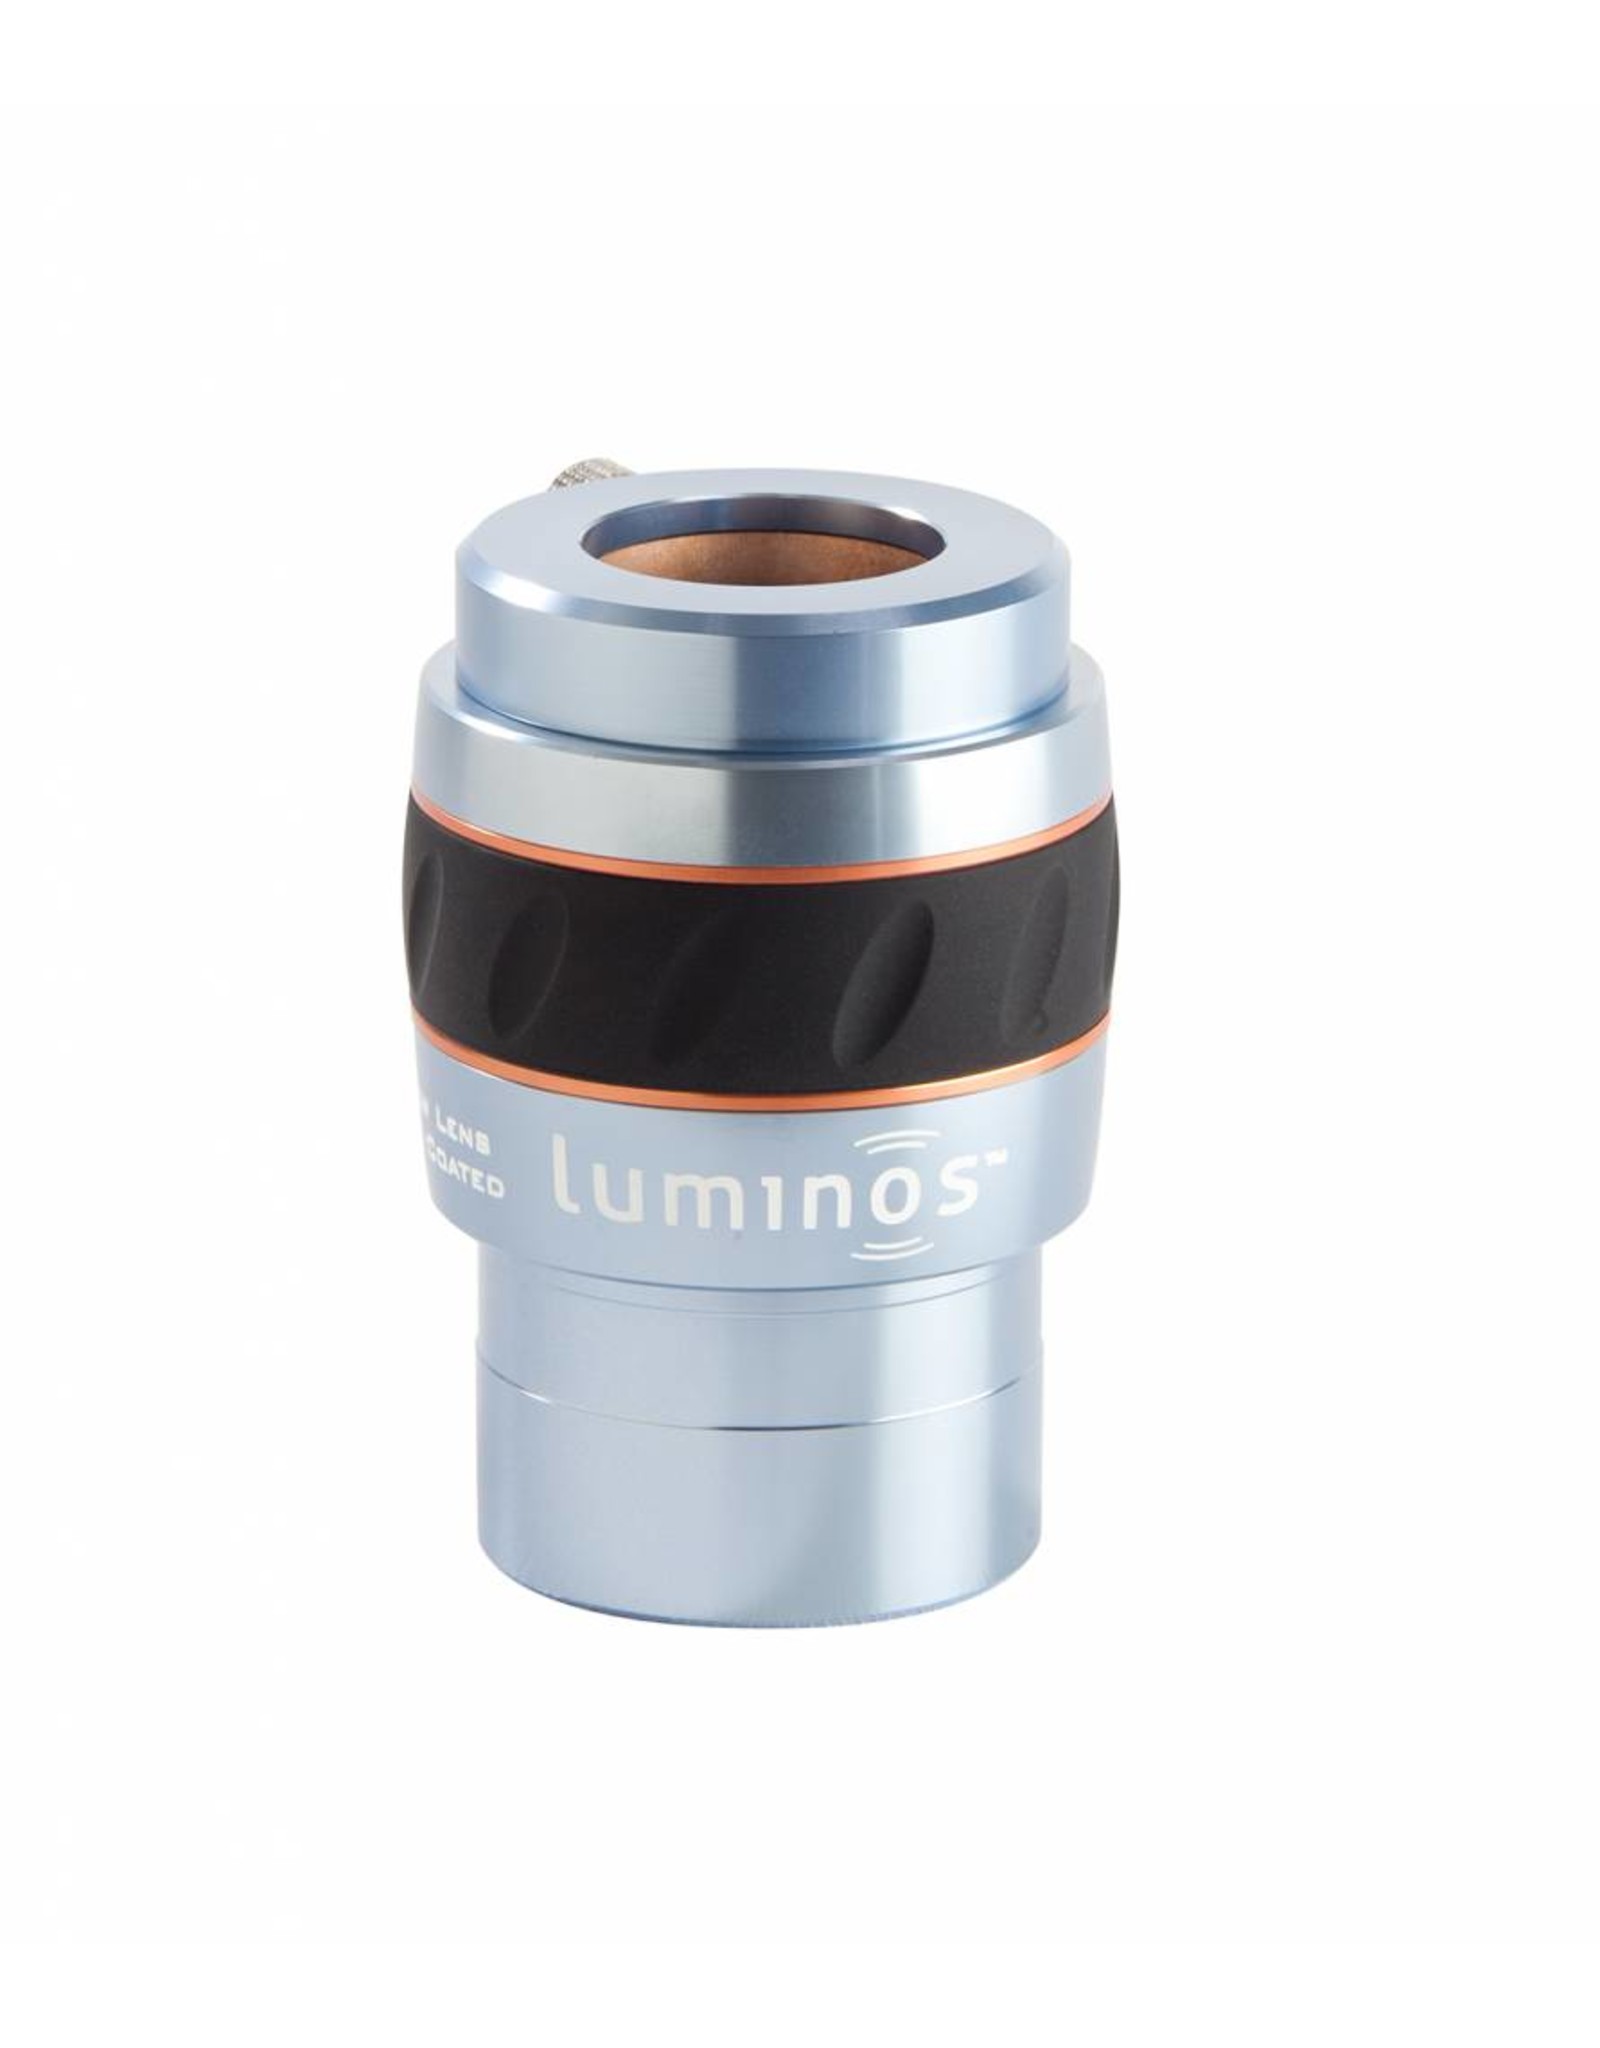 Celestron Celestron Luminos 2" 2.5x Barlow Lens